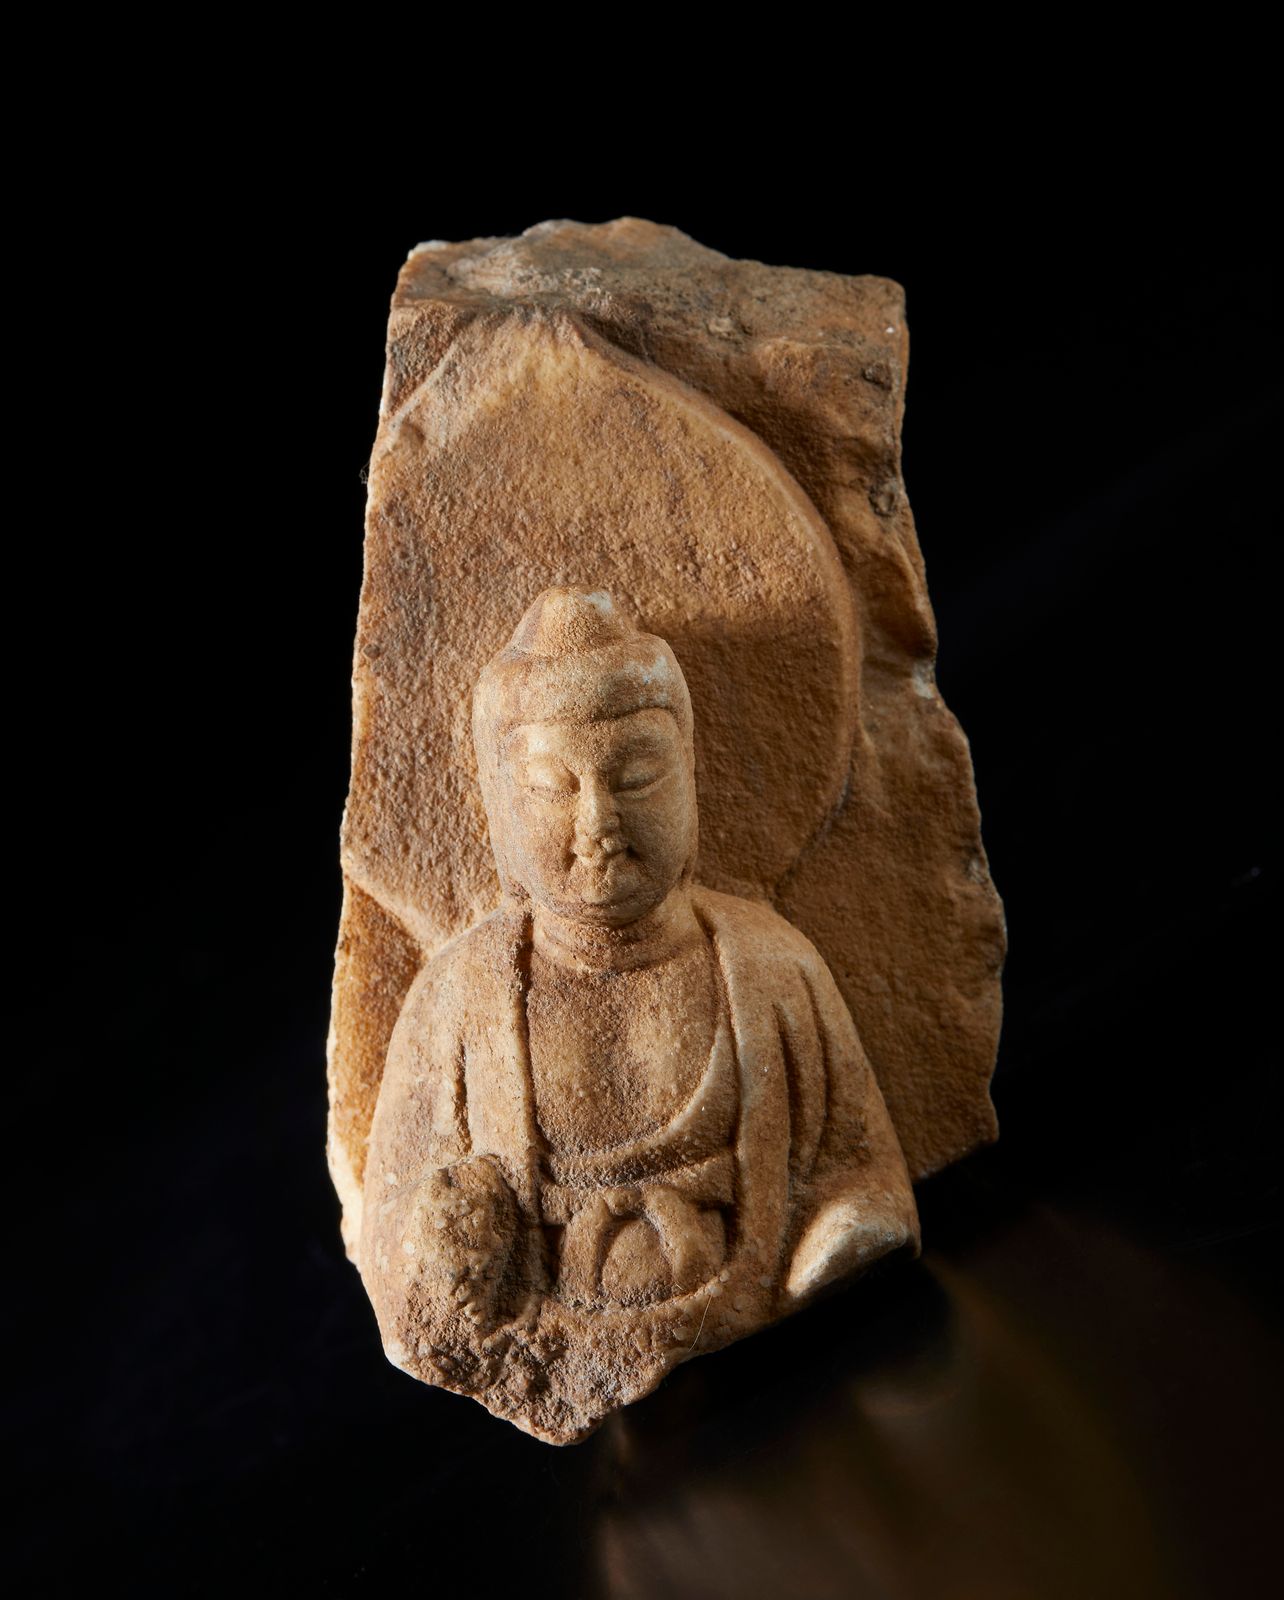 Chinese Art A fragment of a white marble sculpture portraying Buddha 中国艺术。描绘佛祖的白&hellip;